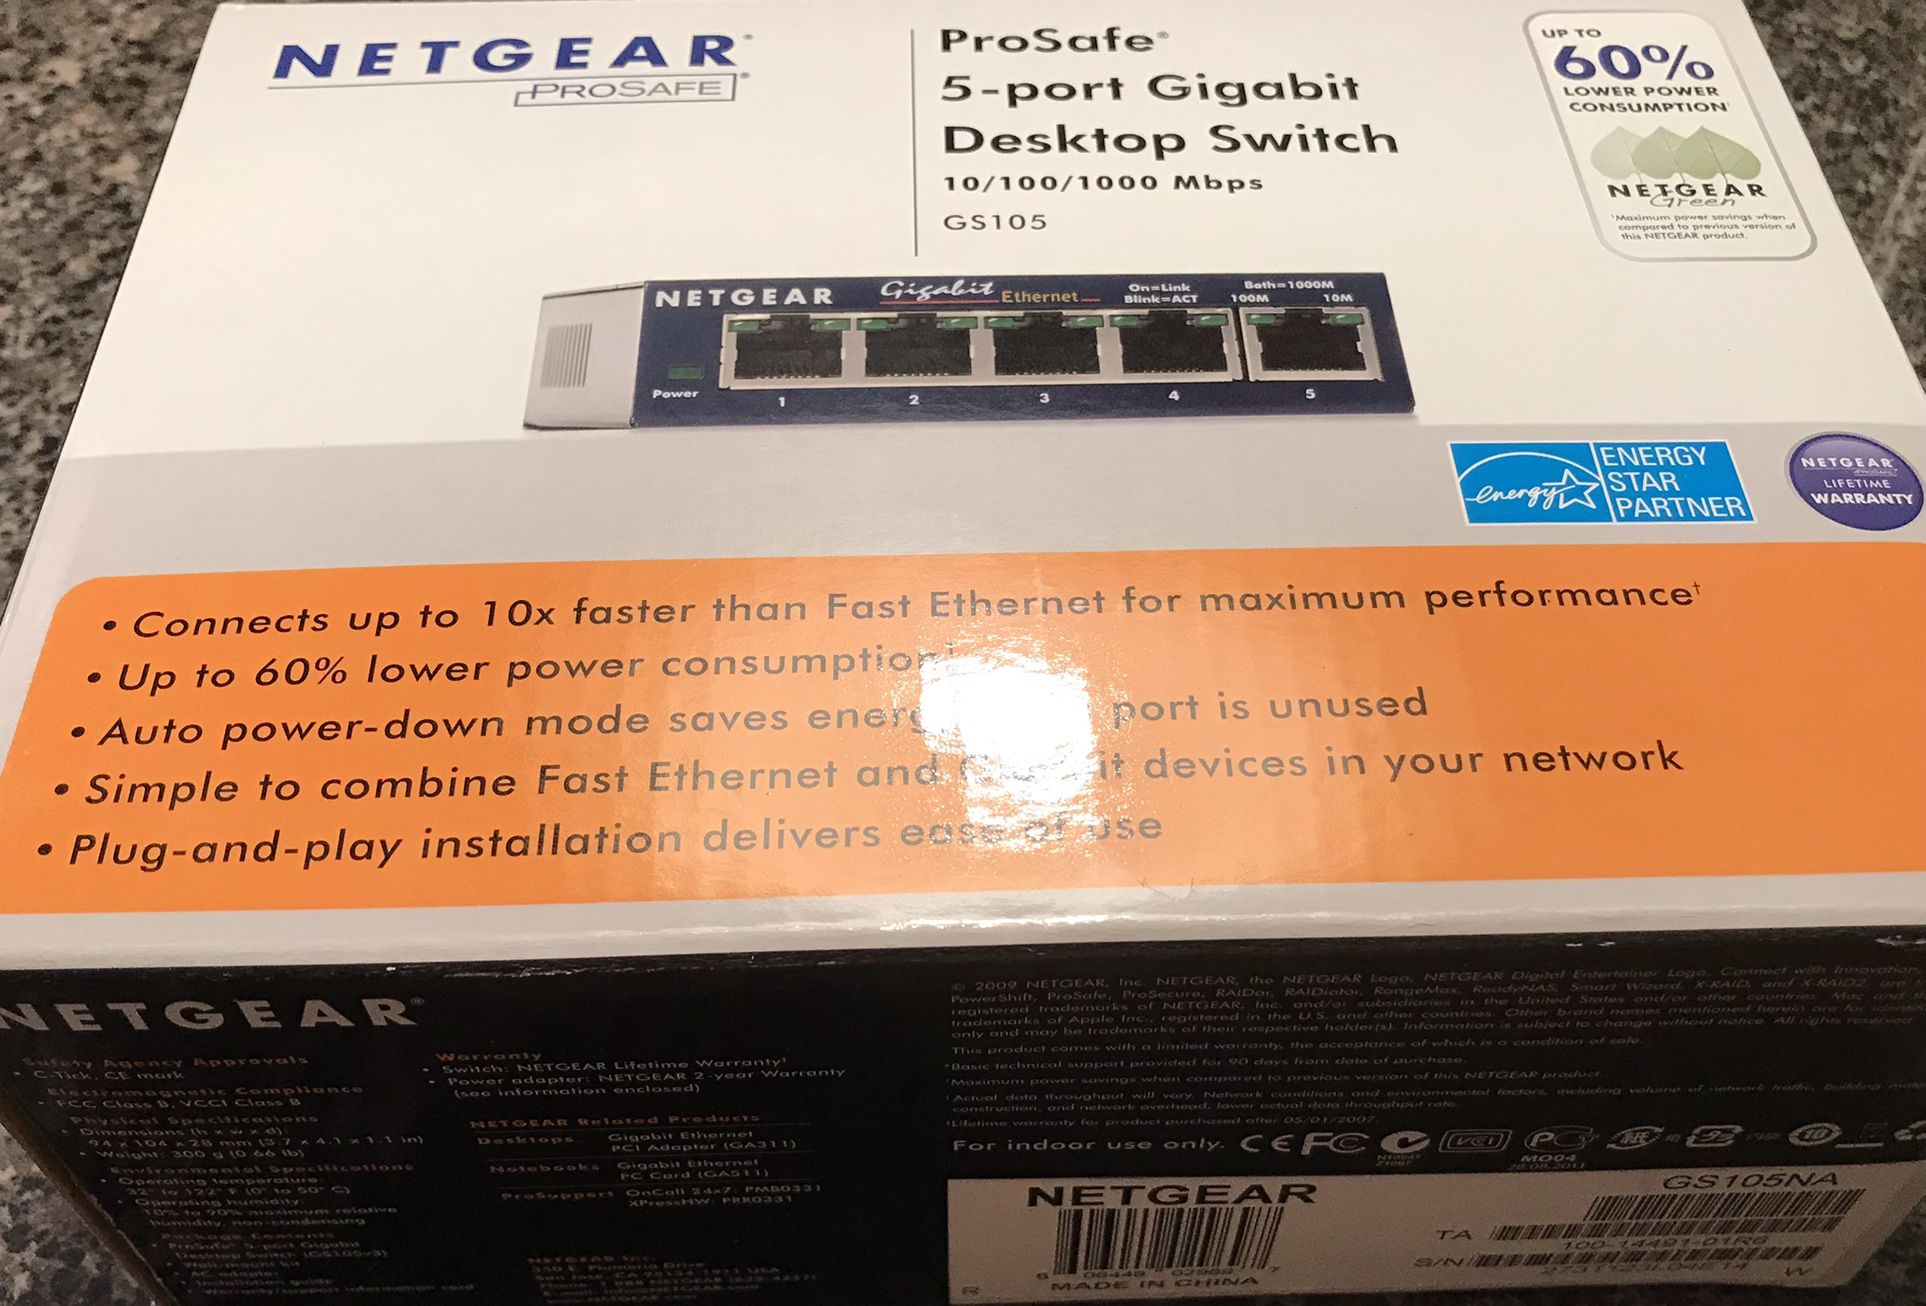 Netgear Prosafe 5-port Gigabit Desktop Switch